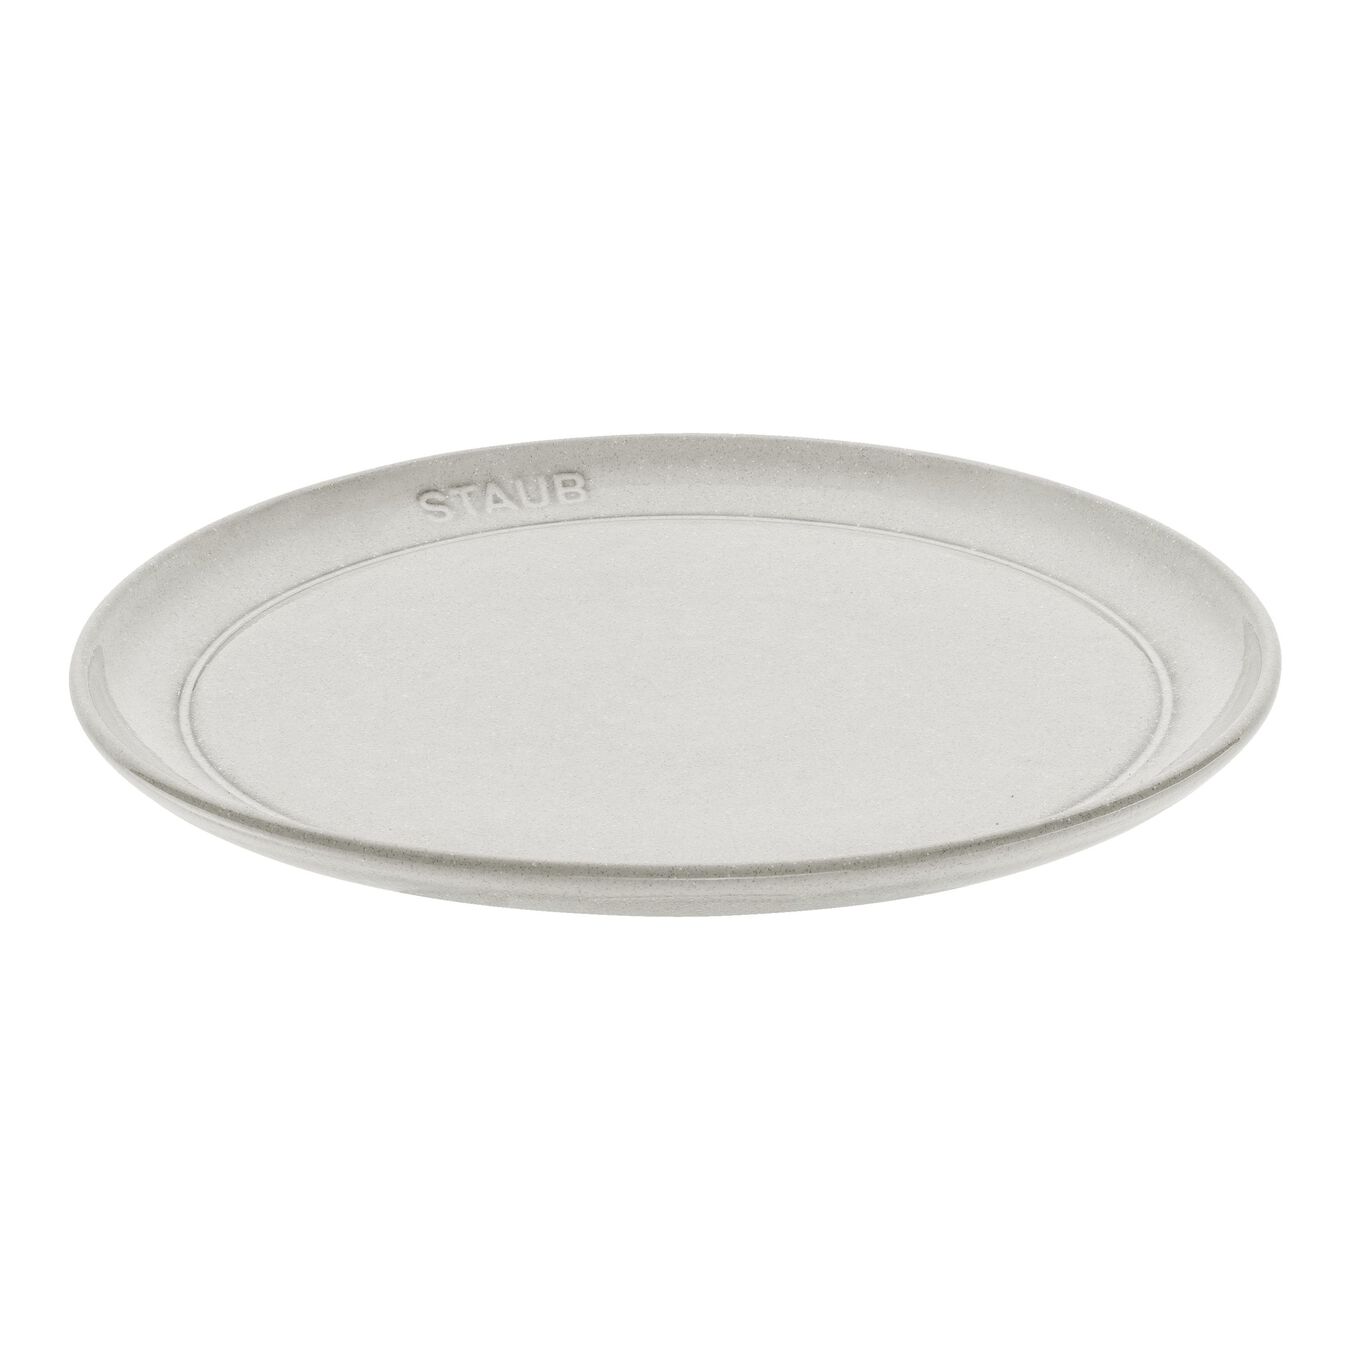 22 cm ceramic round Plate flat, white truffle,,large 1